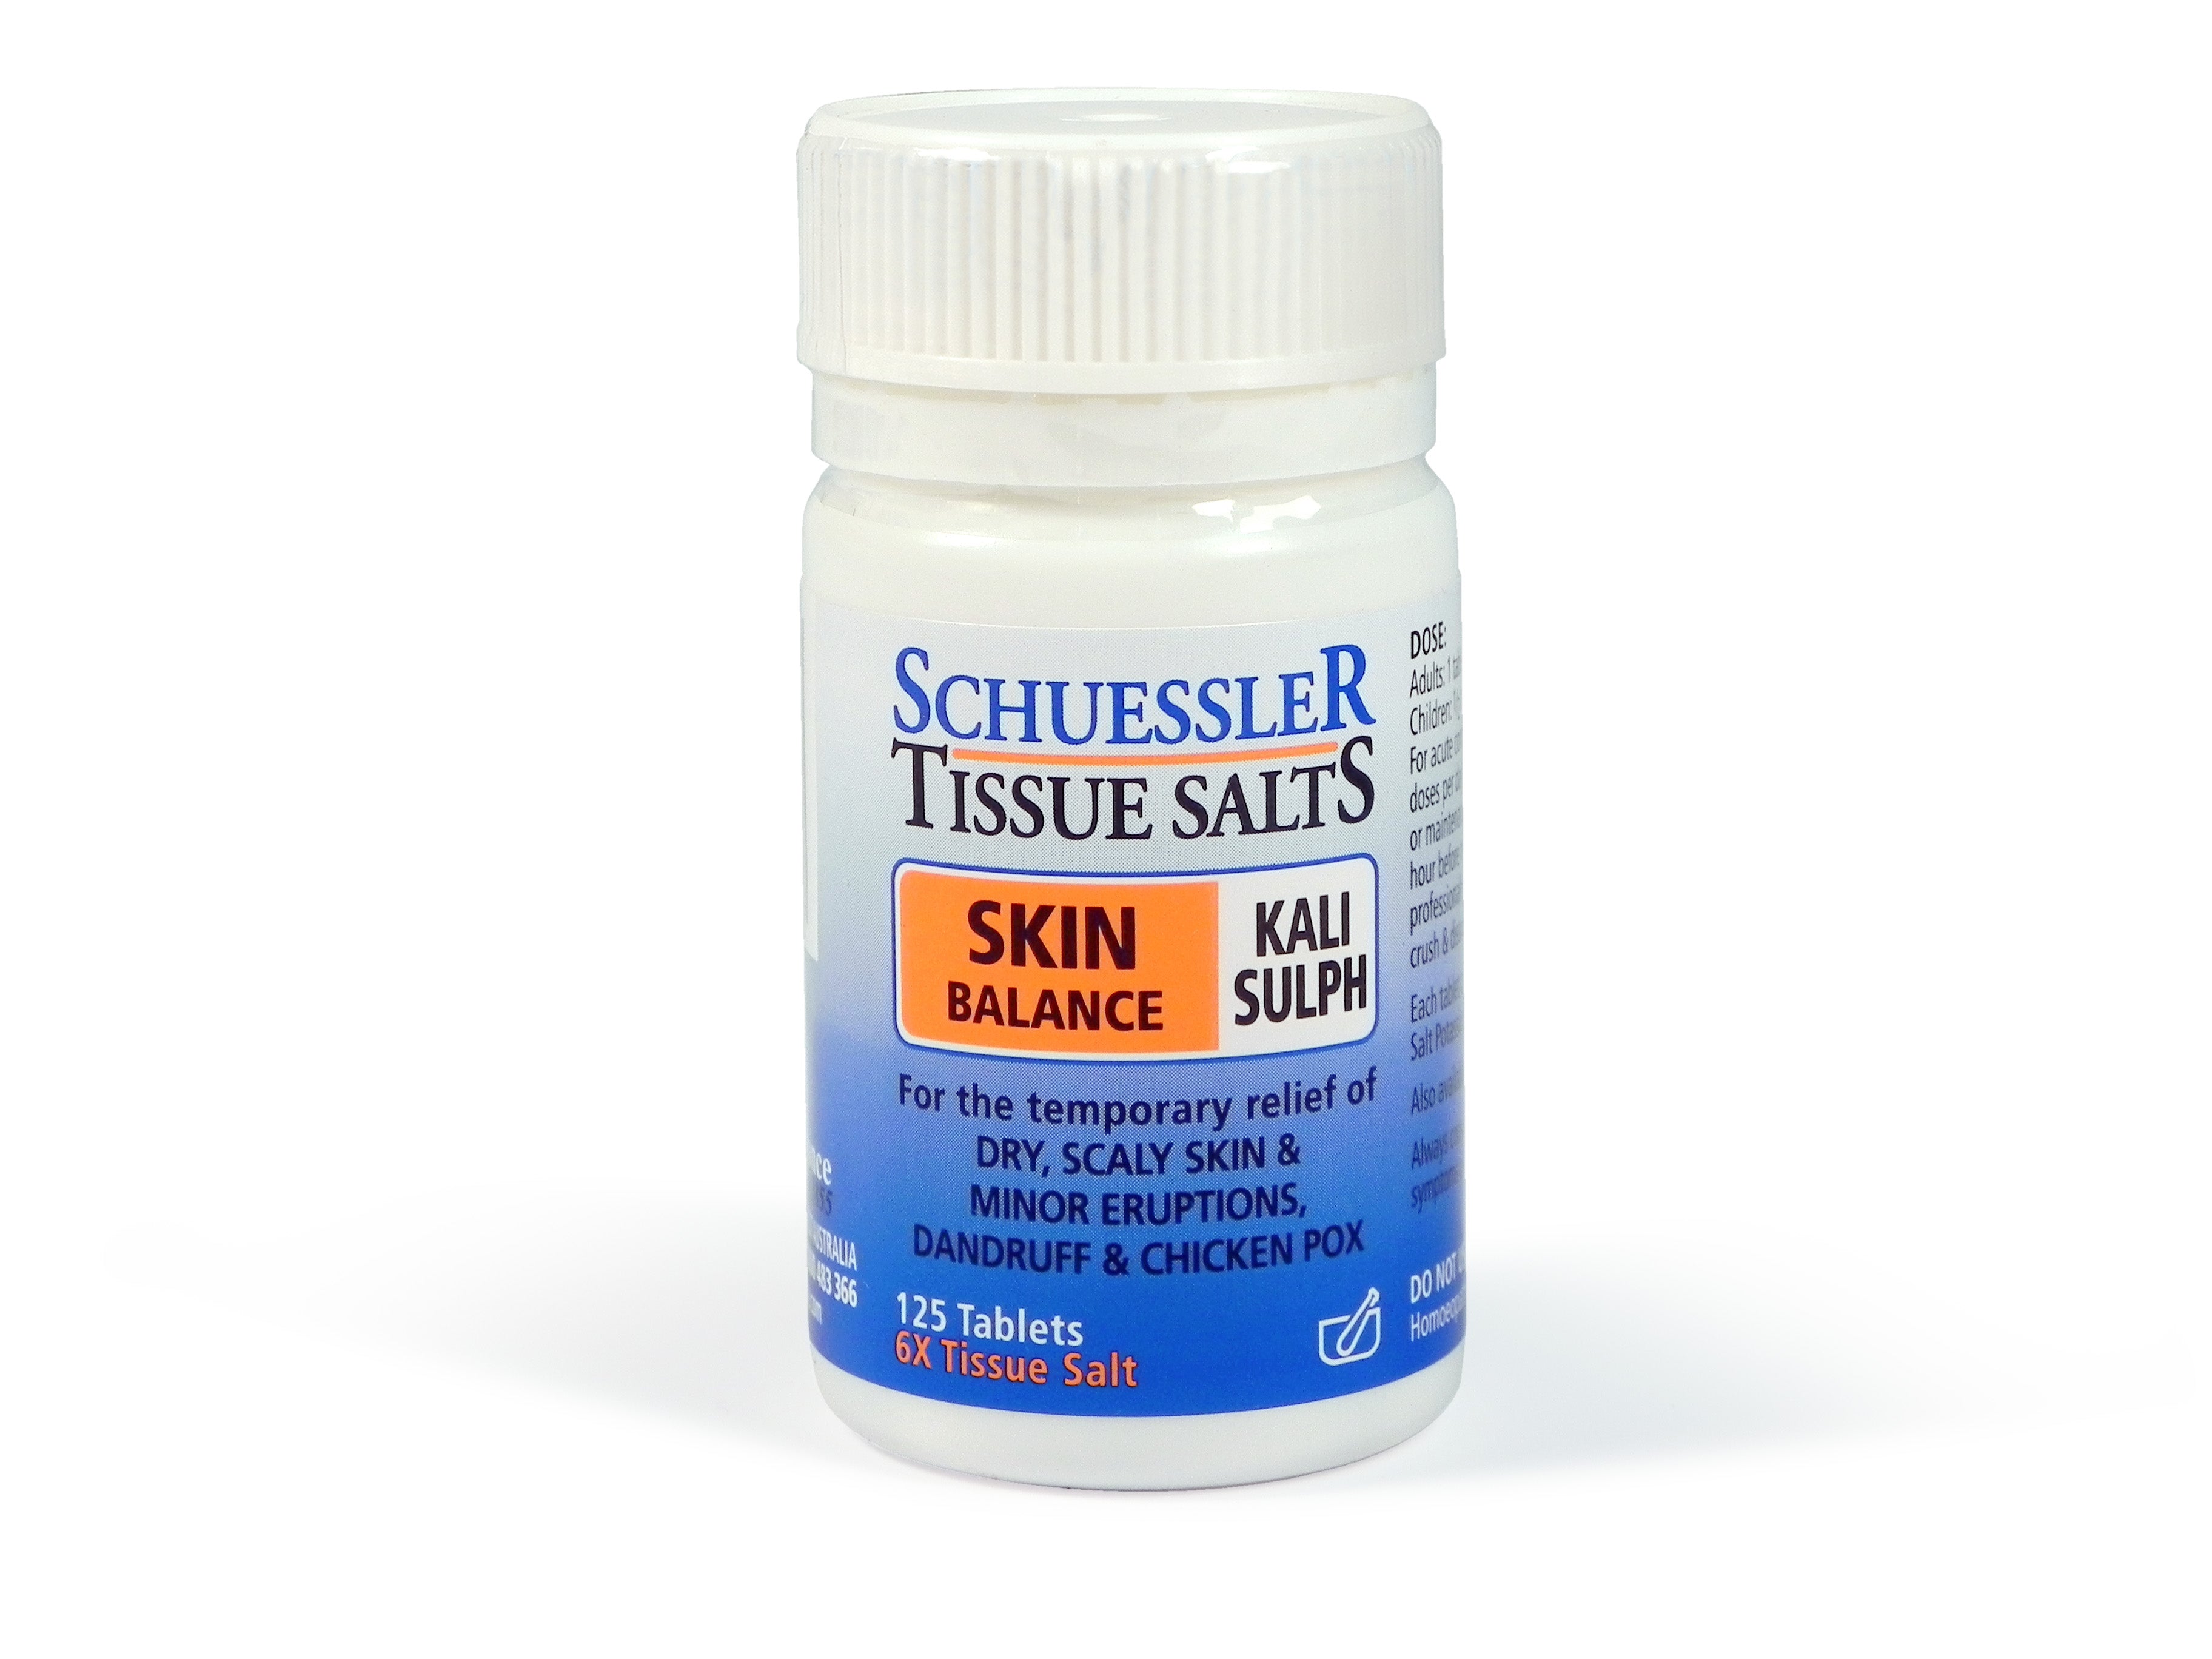 Schuessler Tissue Salts - Kali Sulph